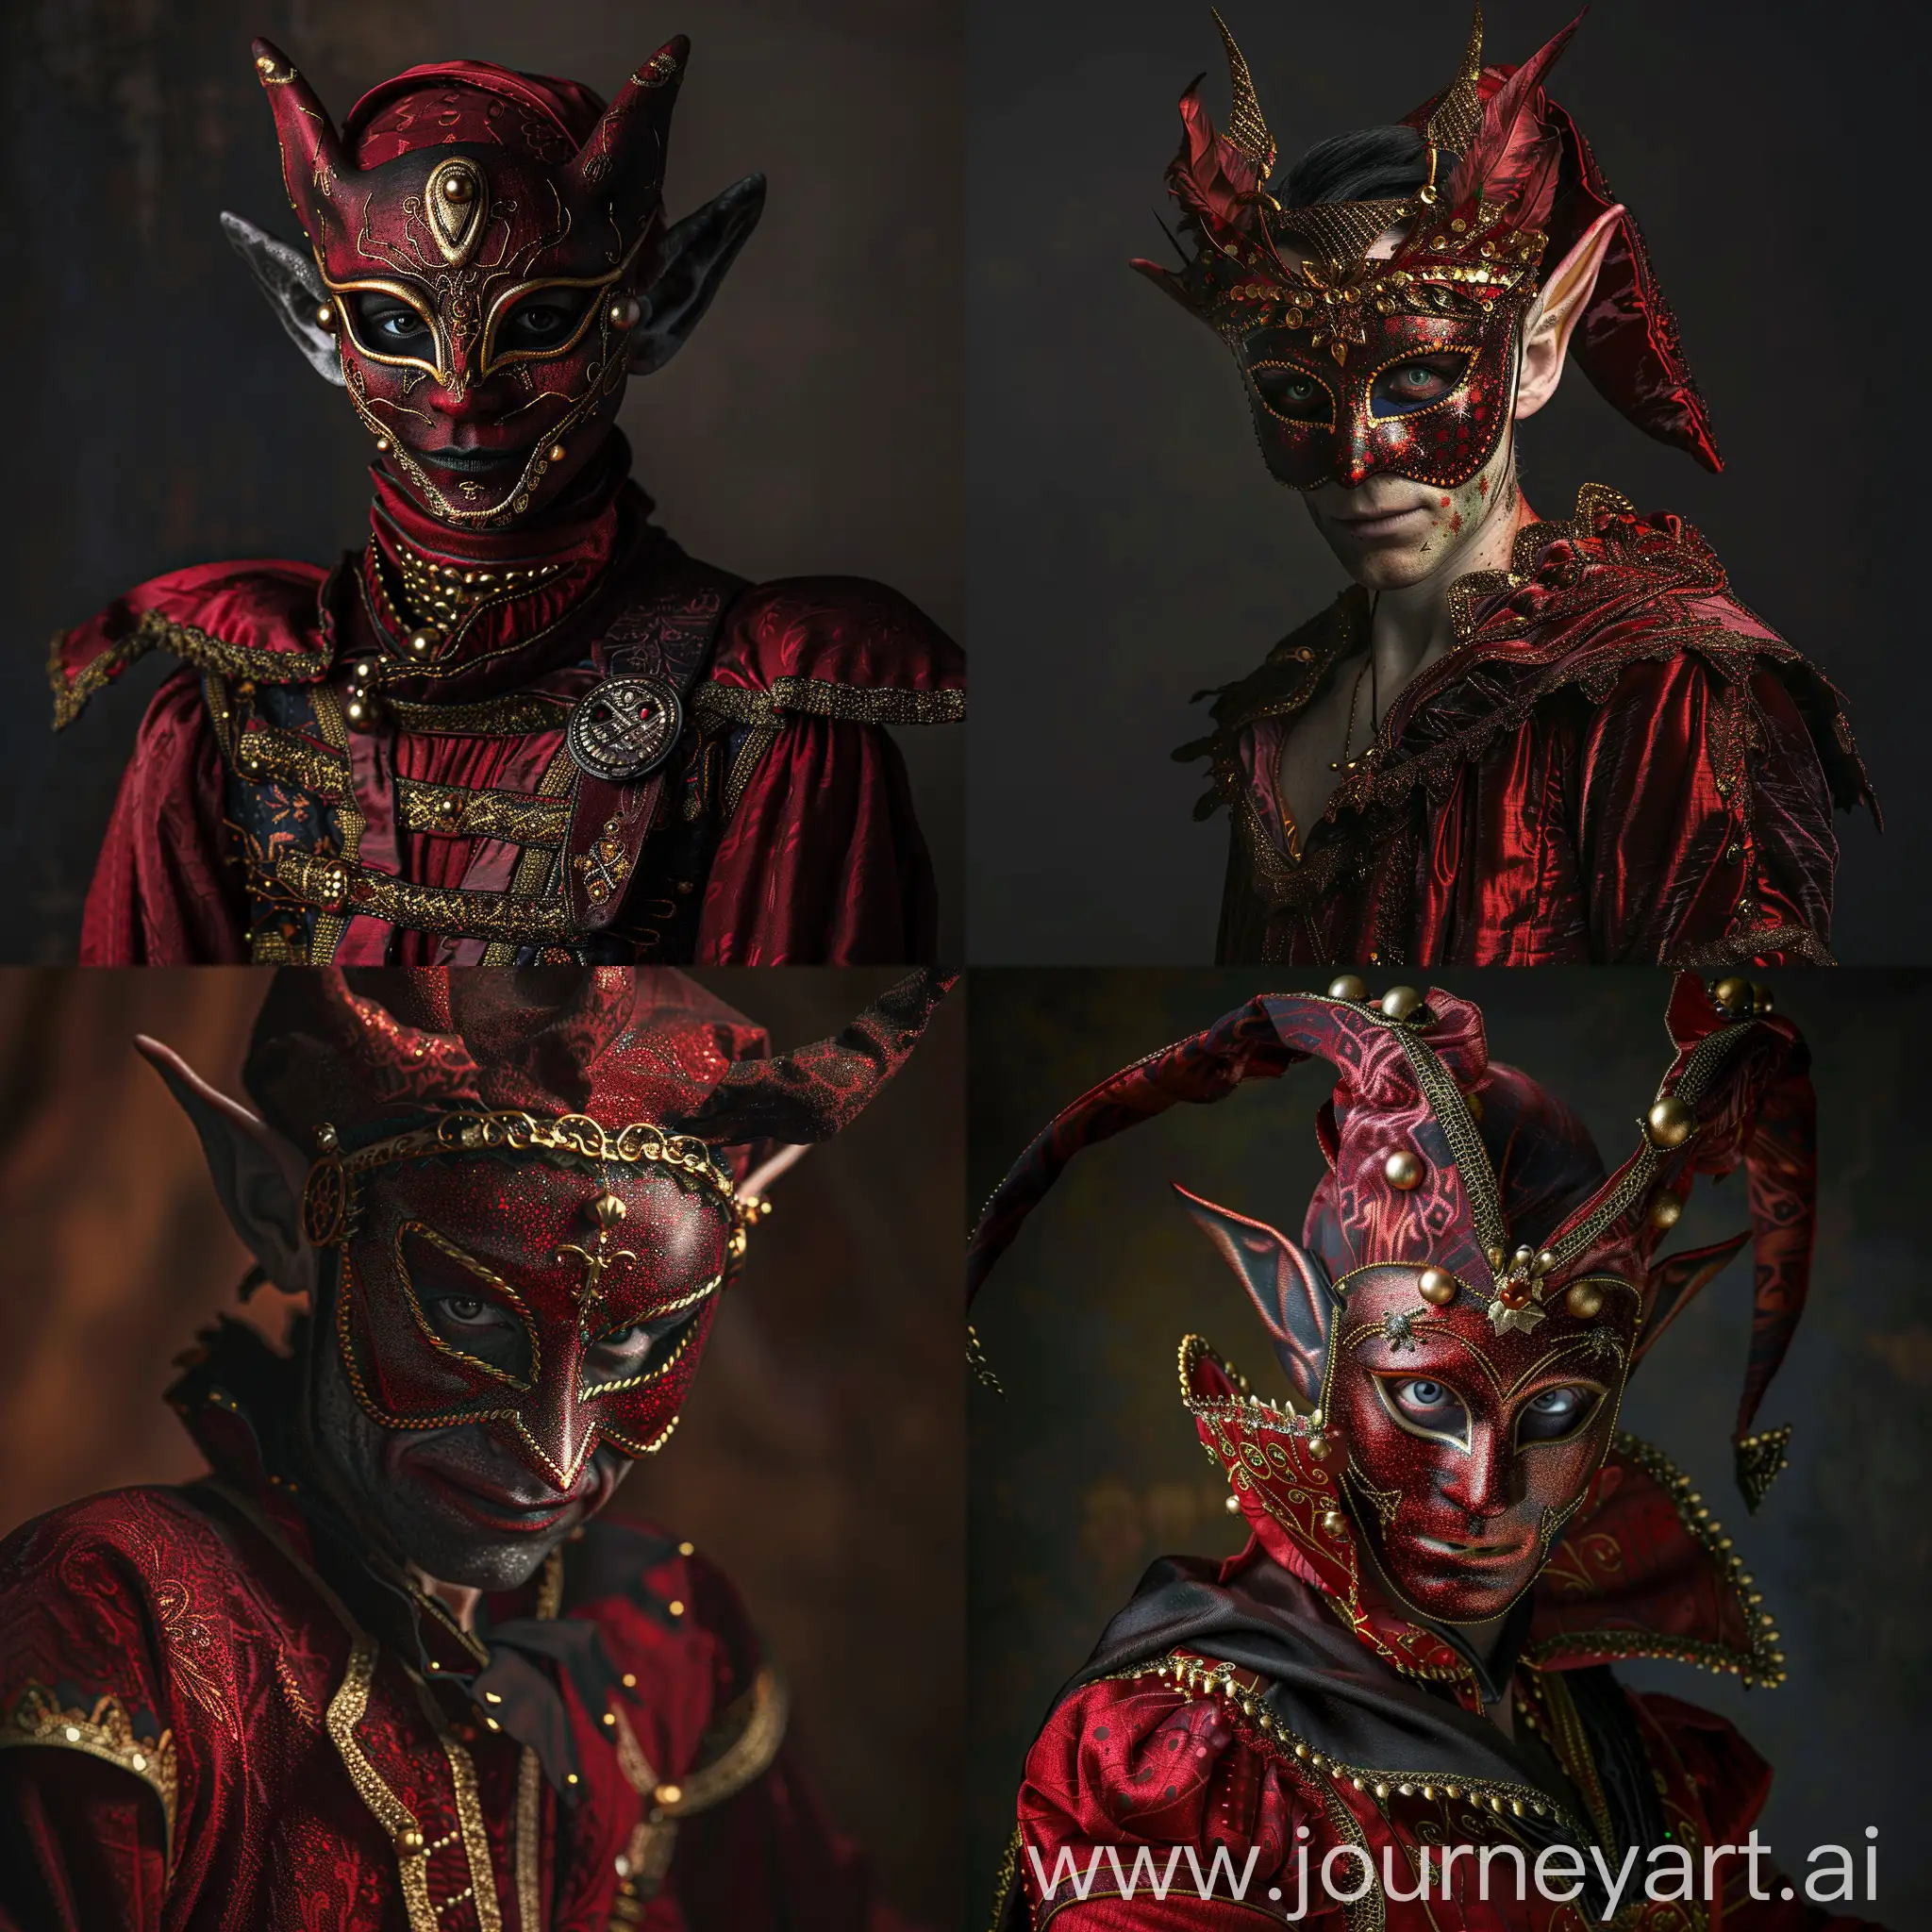 Mysterious-RedGarbed-Elf-in-Dark-Fantasy-Carnival-Setting